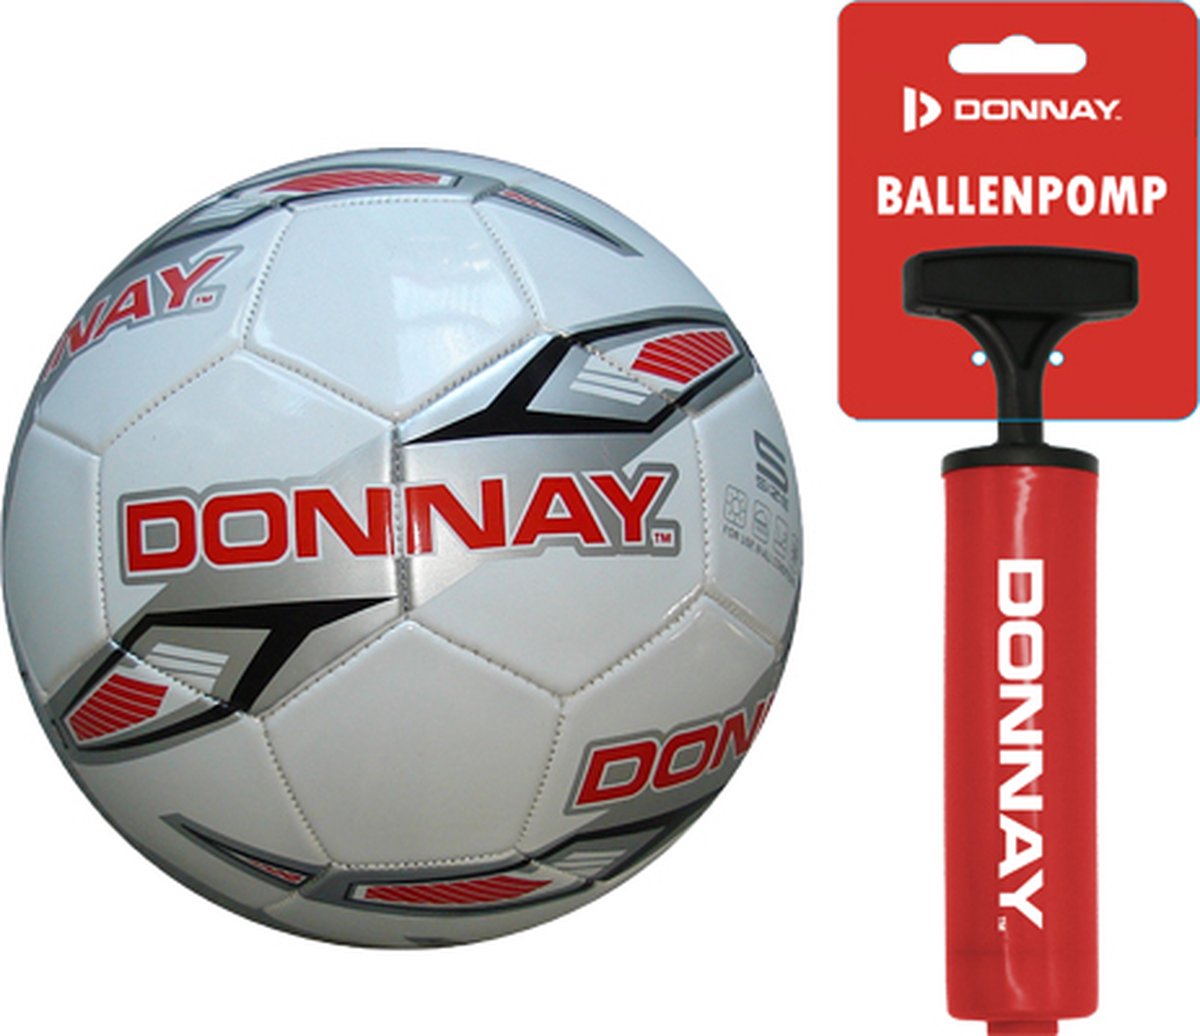 Donnay Voetbal - PVC - White/Red (935) - maat 5 - Gratis pomp